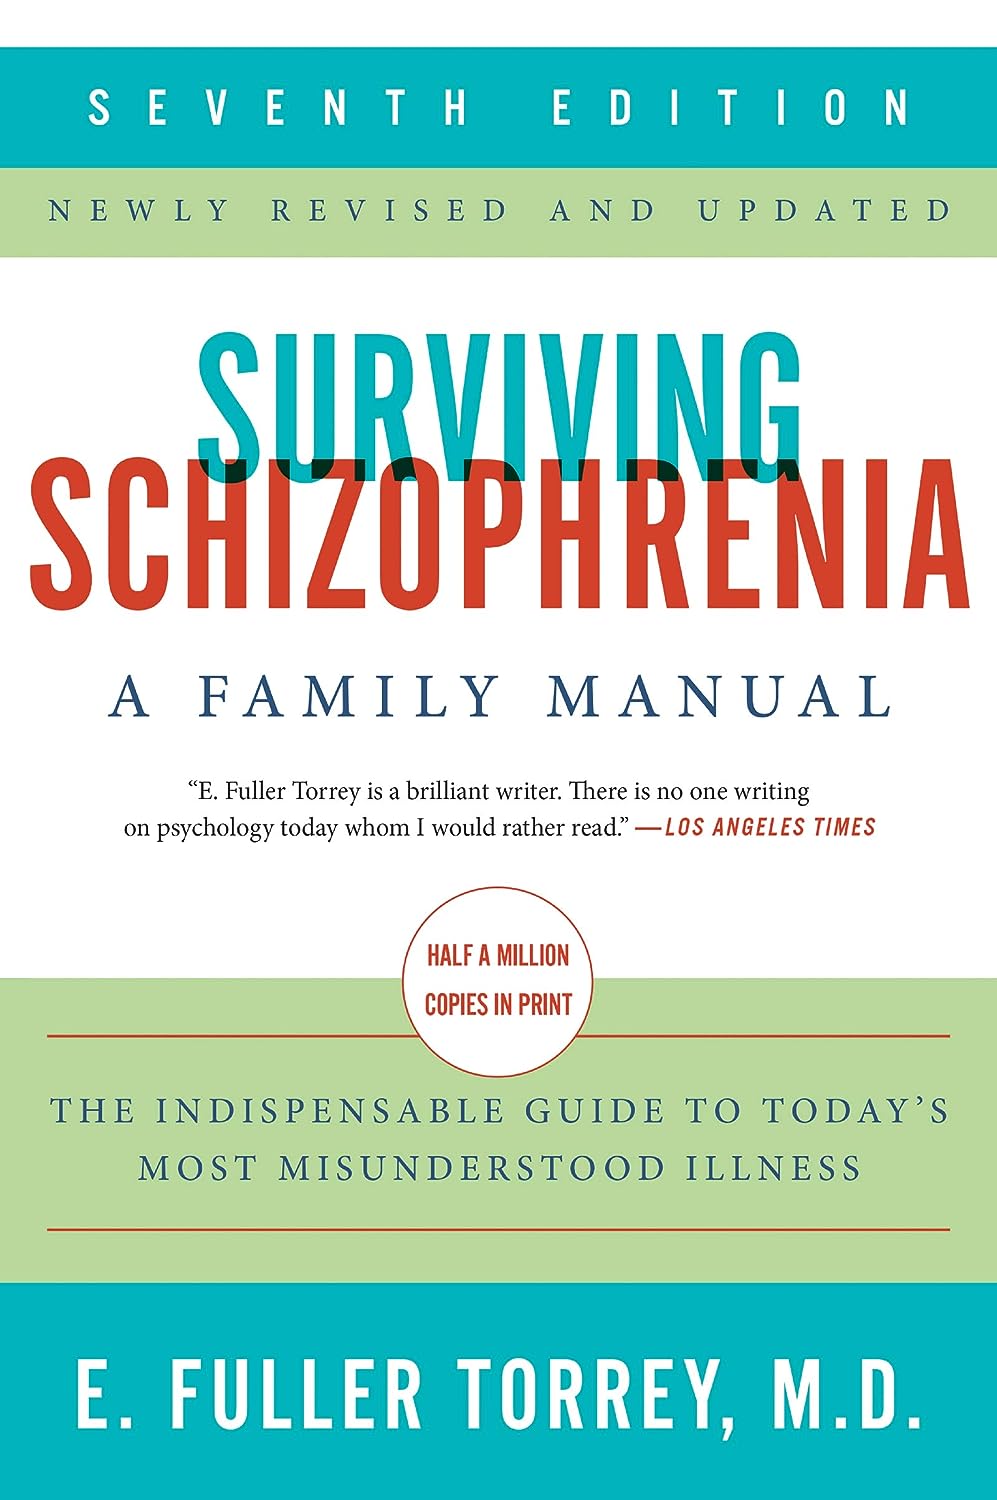 books about schizophrenia11